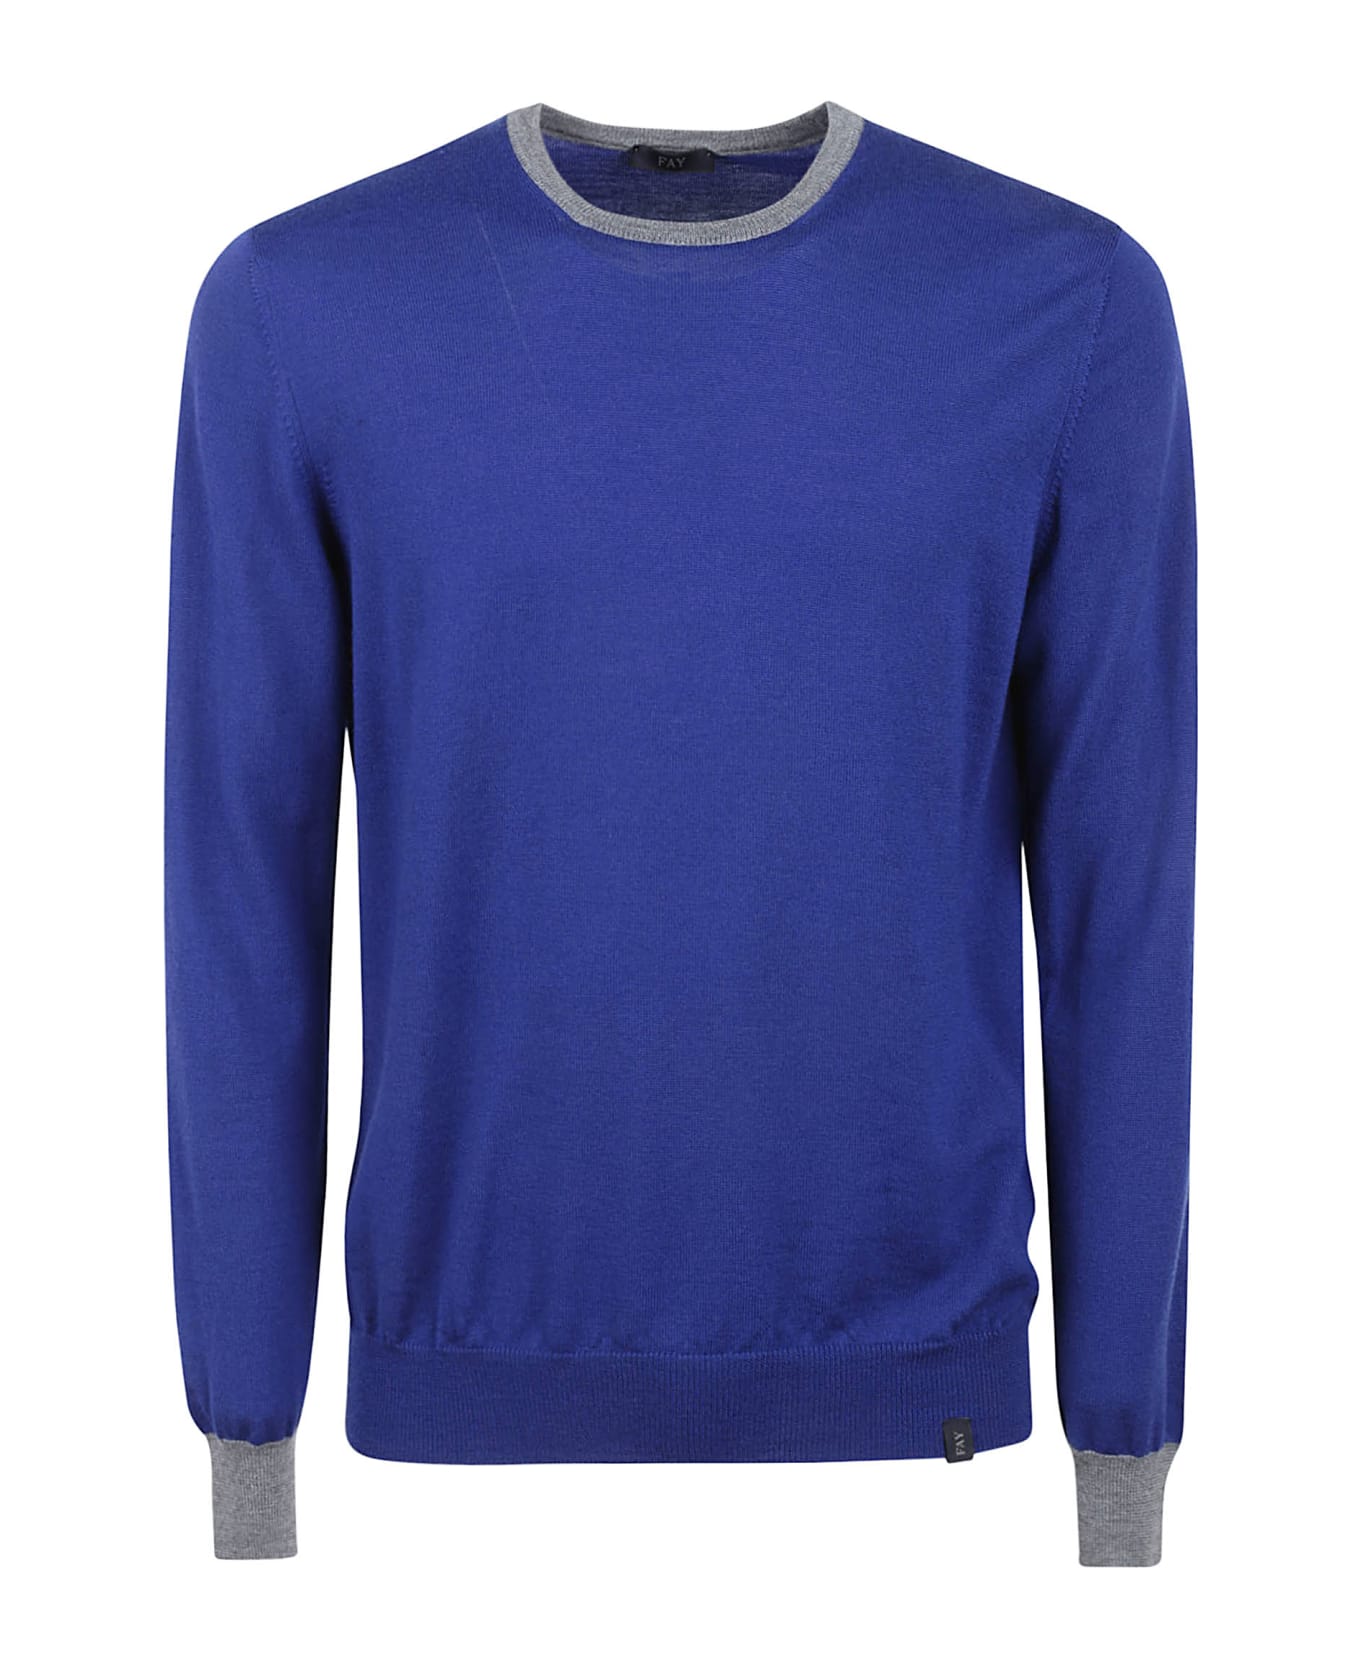 Fay Padded Shoulder Rib Trim Sweater - Royal Blue ニットウェア